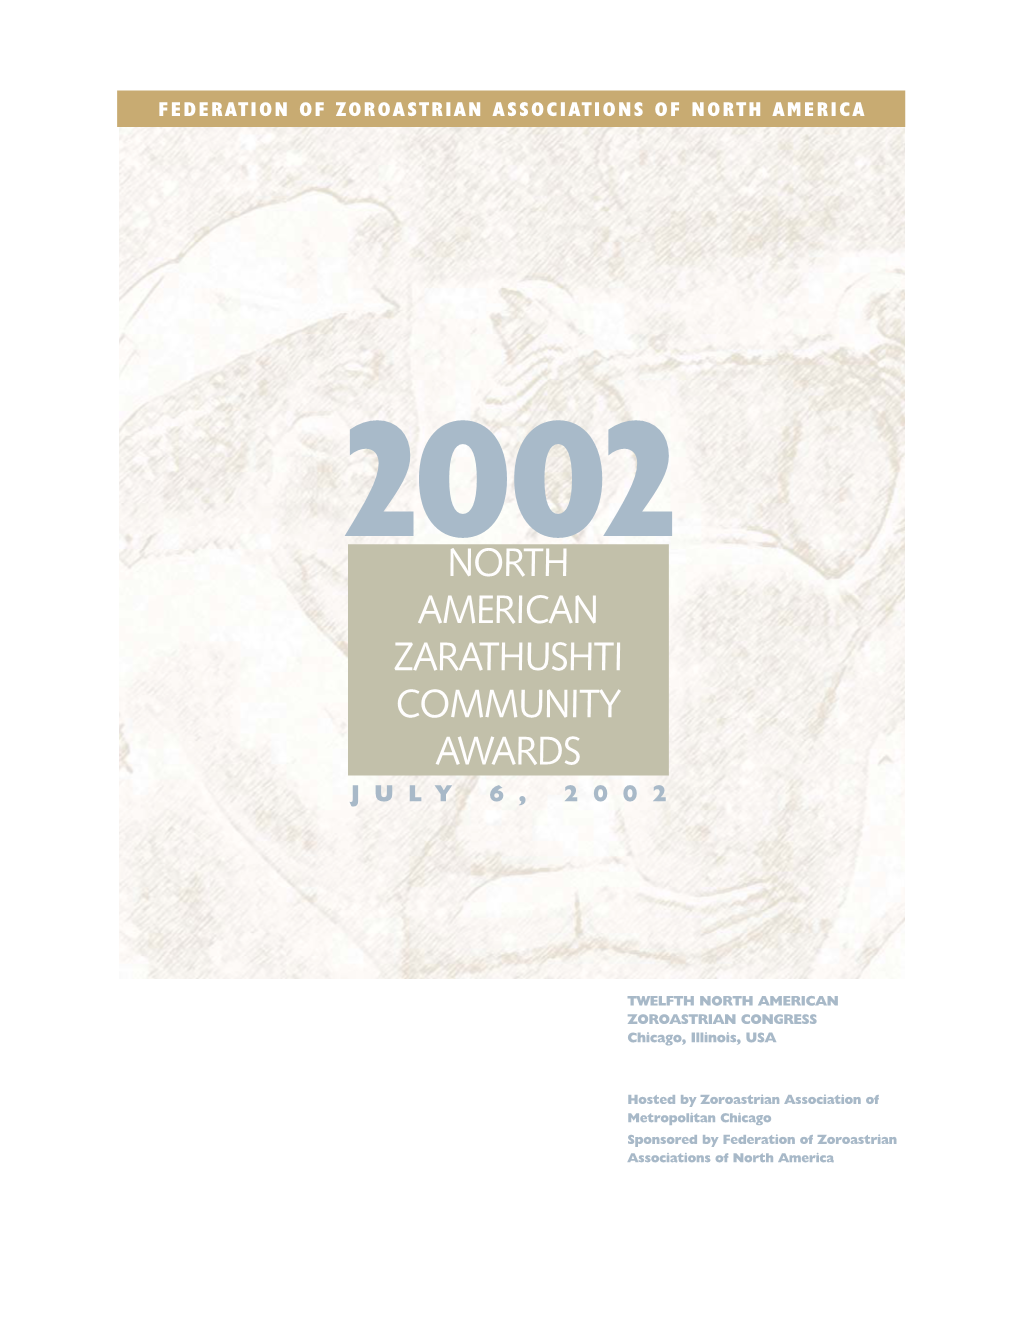 North American Zarathushti Community Awards July 6, 2002